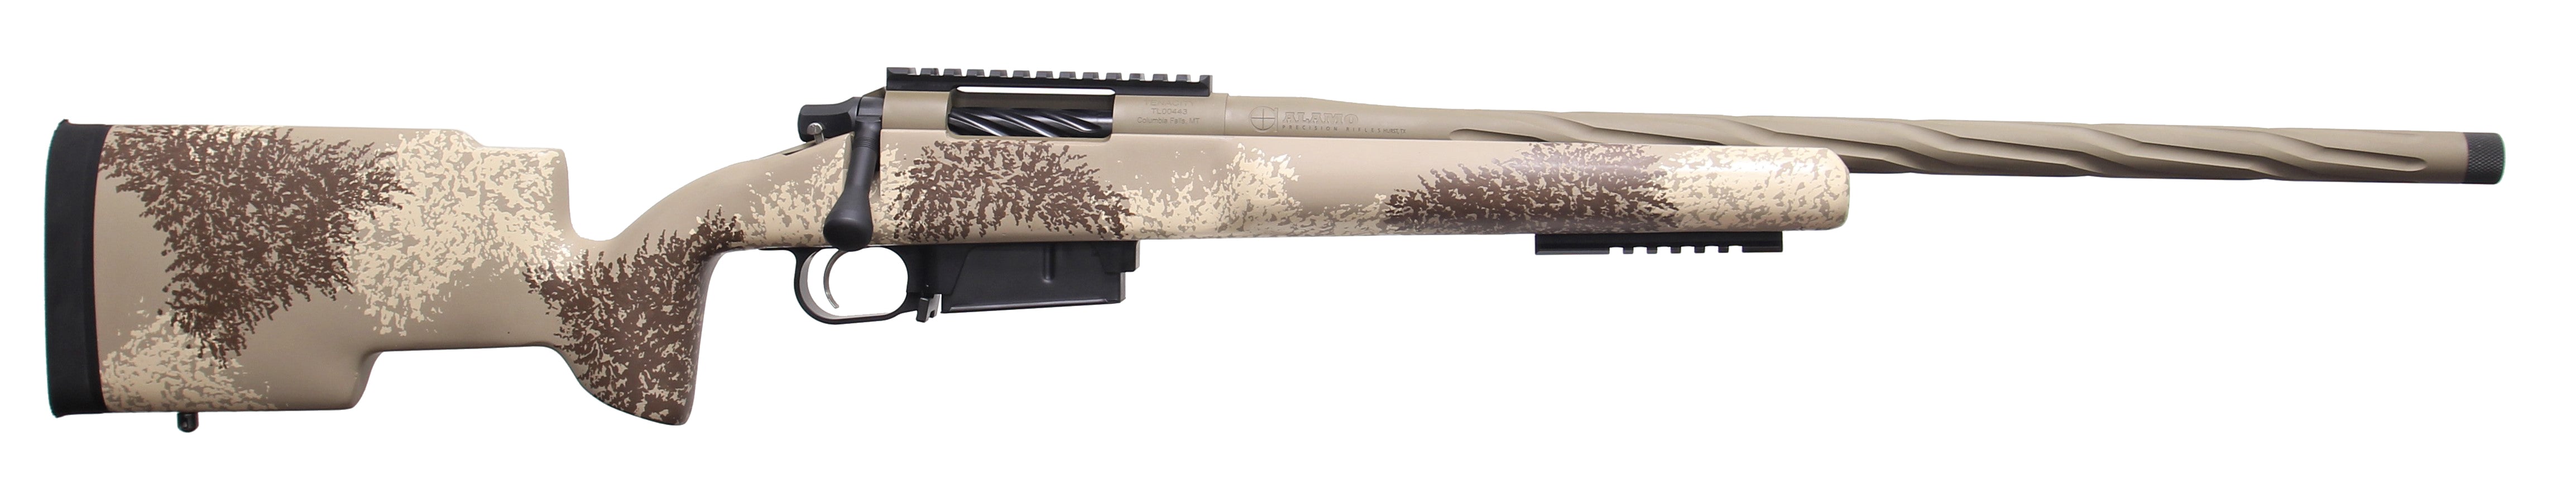 Apr Ranger 22 Creedmoor Alamo Precision Rifles